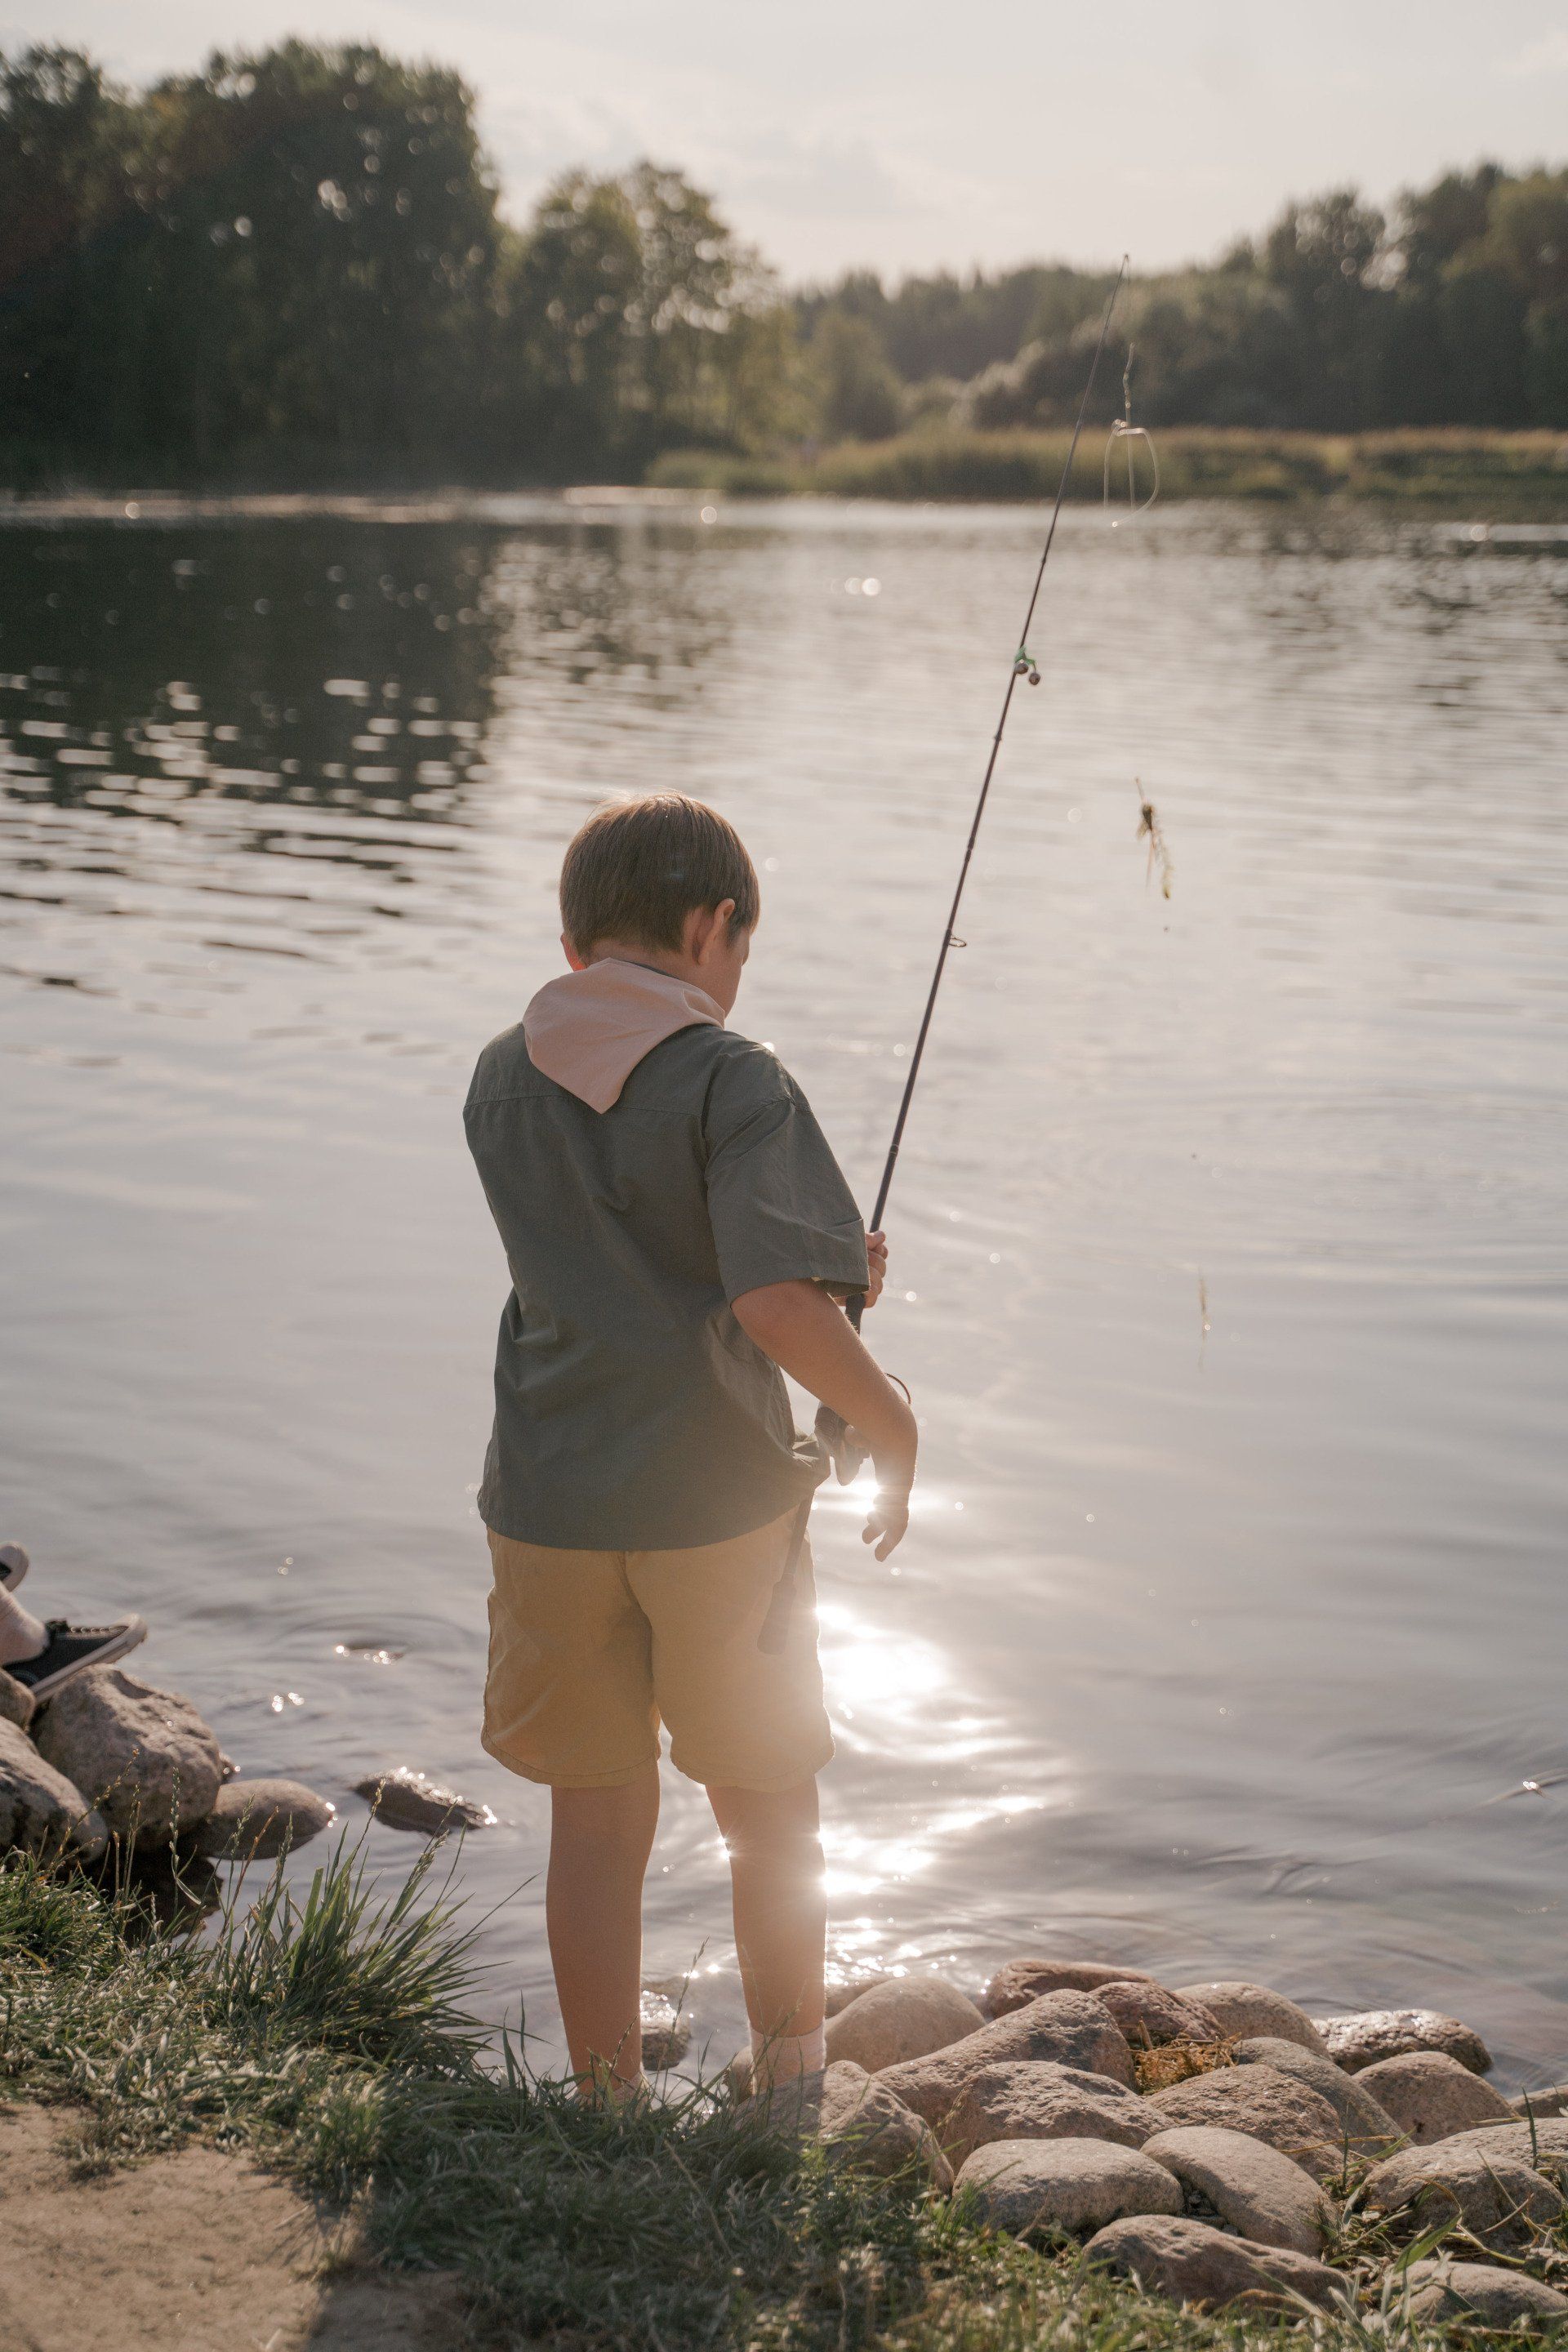 Kid fishing on the edge of a lake